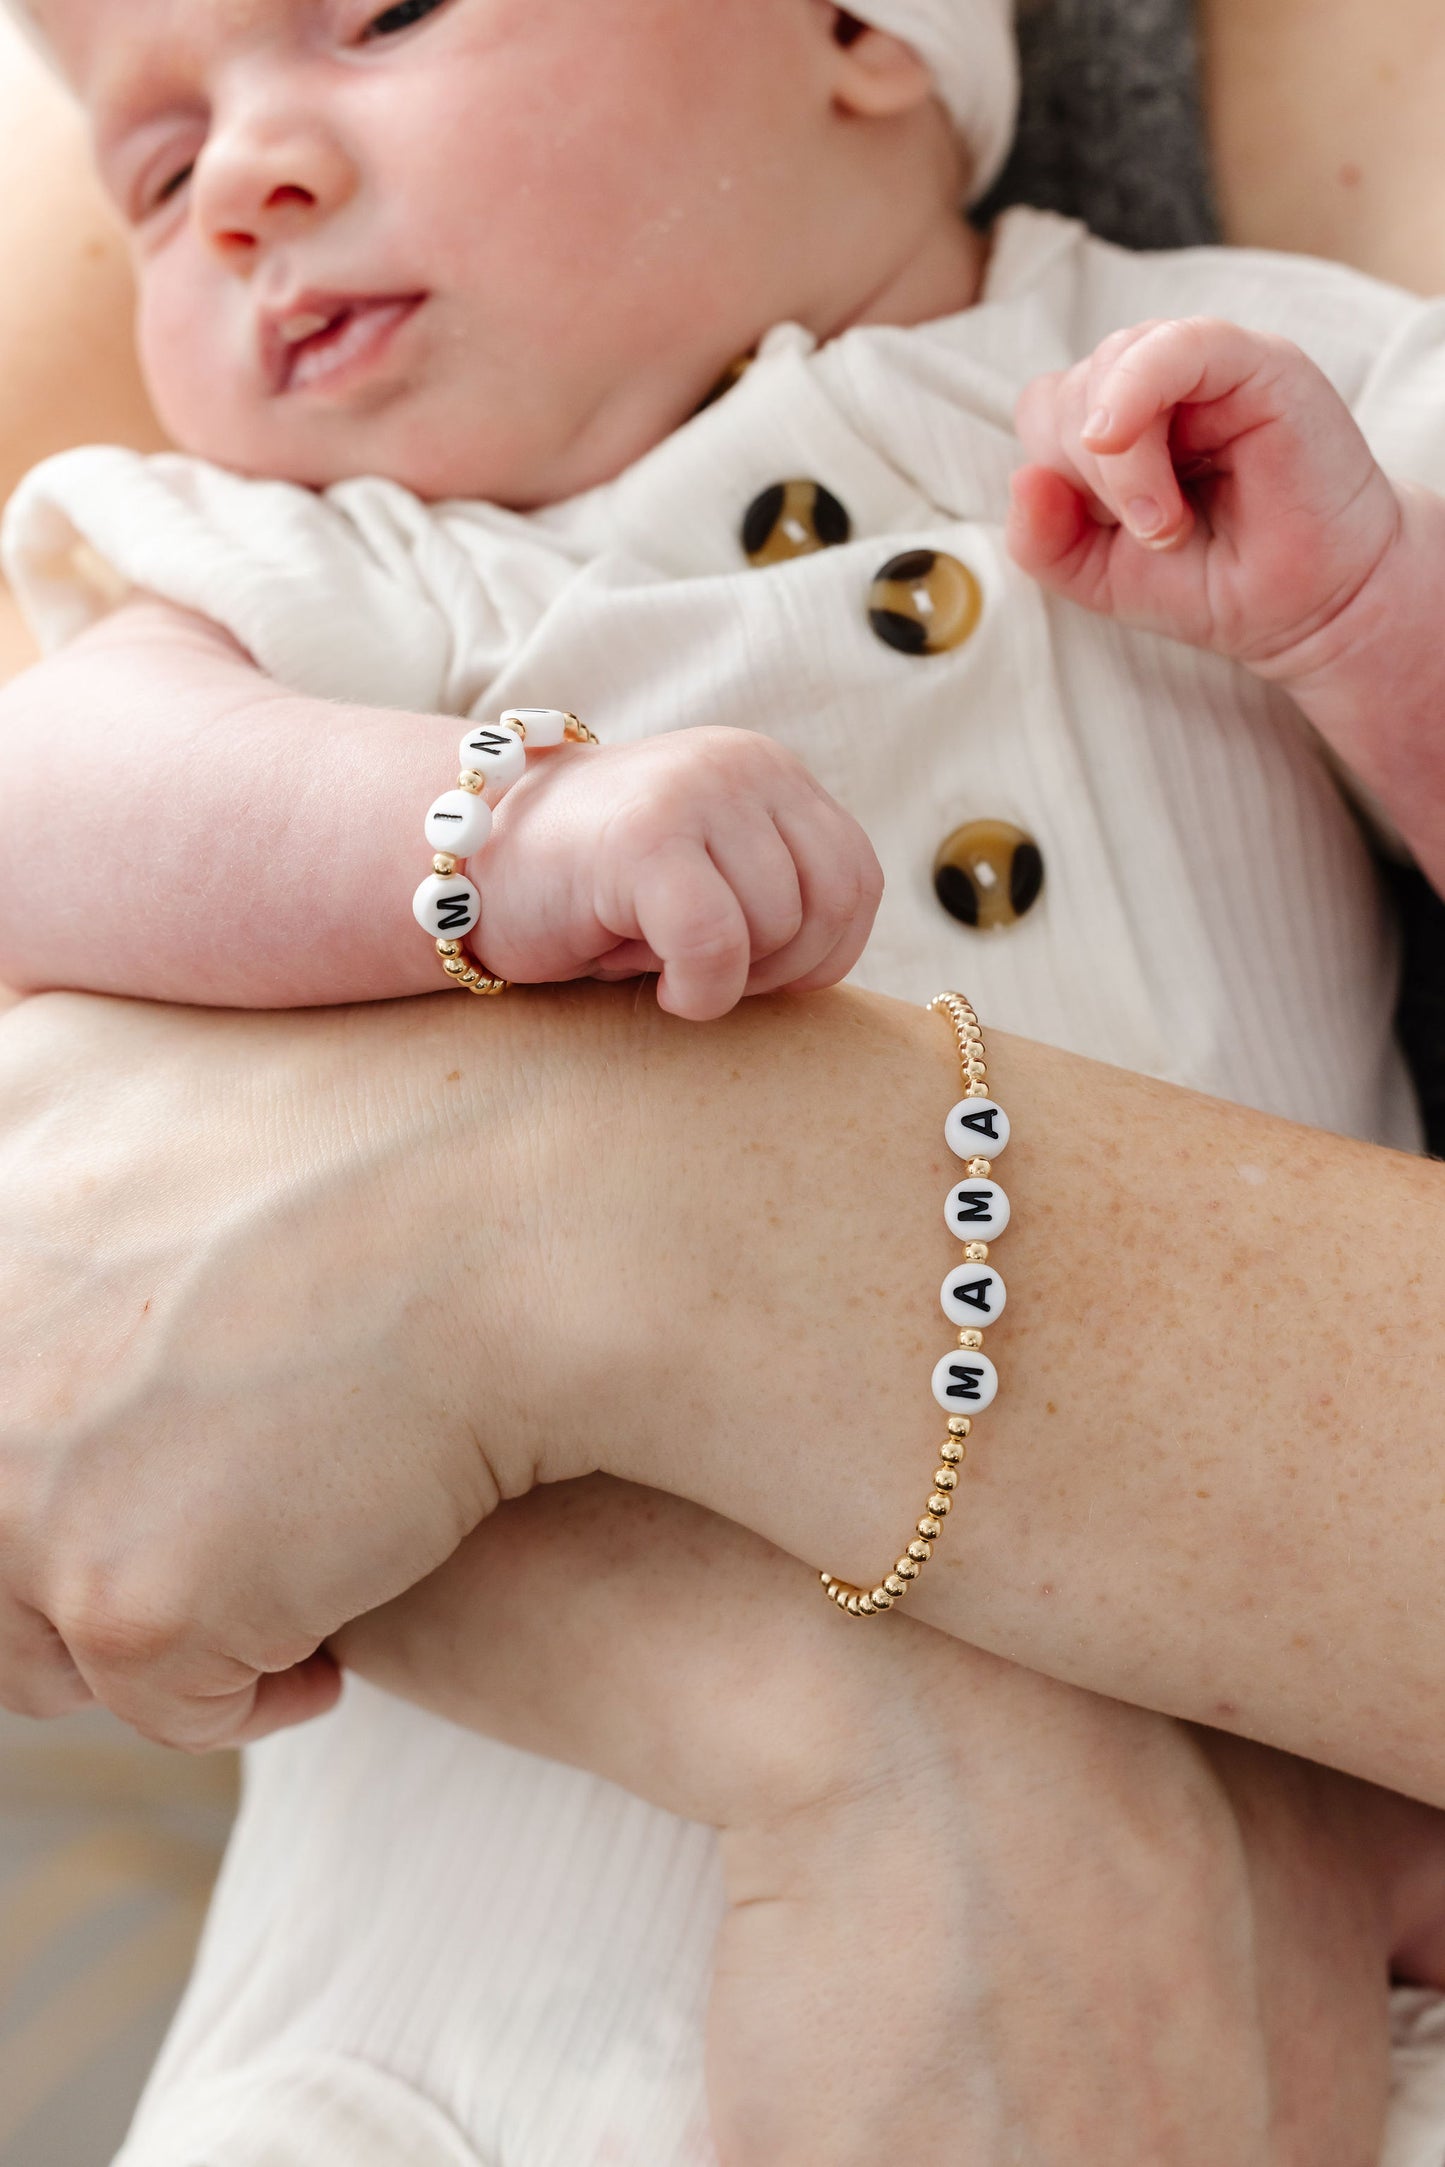 MAMA Adult Bracelet (3MM+6MM beads)